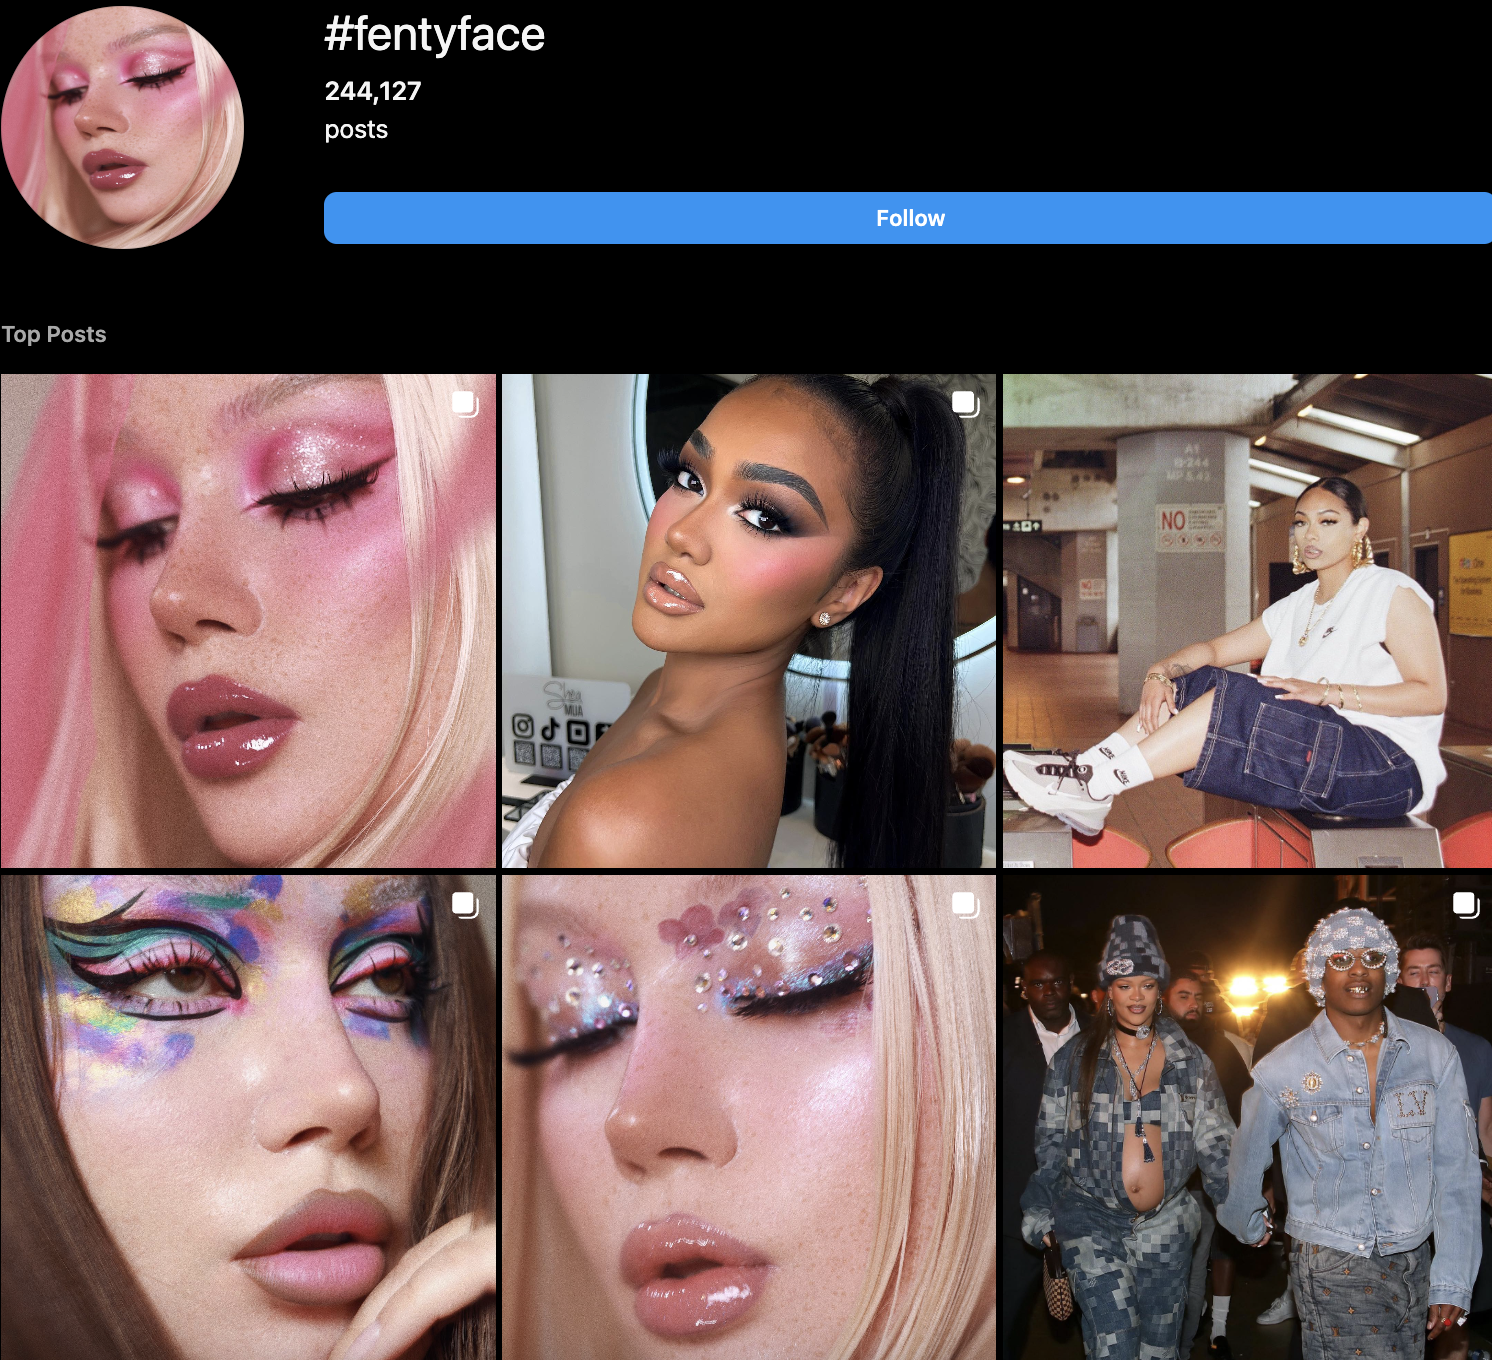 Fenty Beauty - #FENTYFACE, social media marketing campaigns by beauty brands